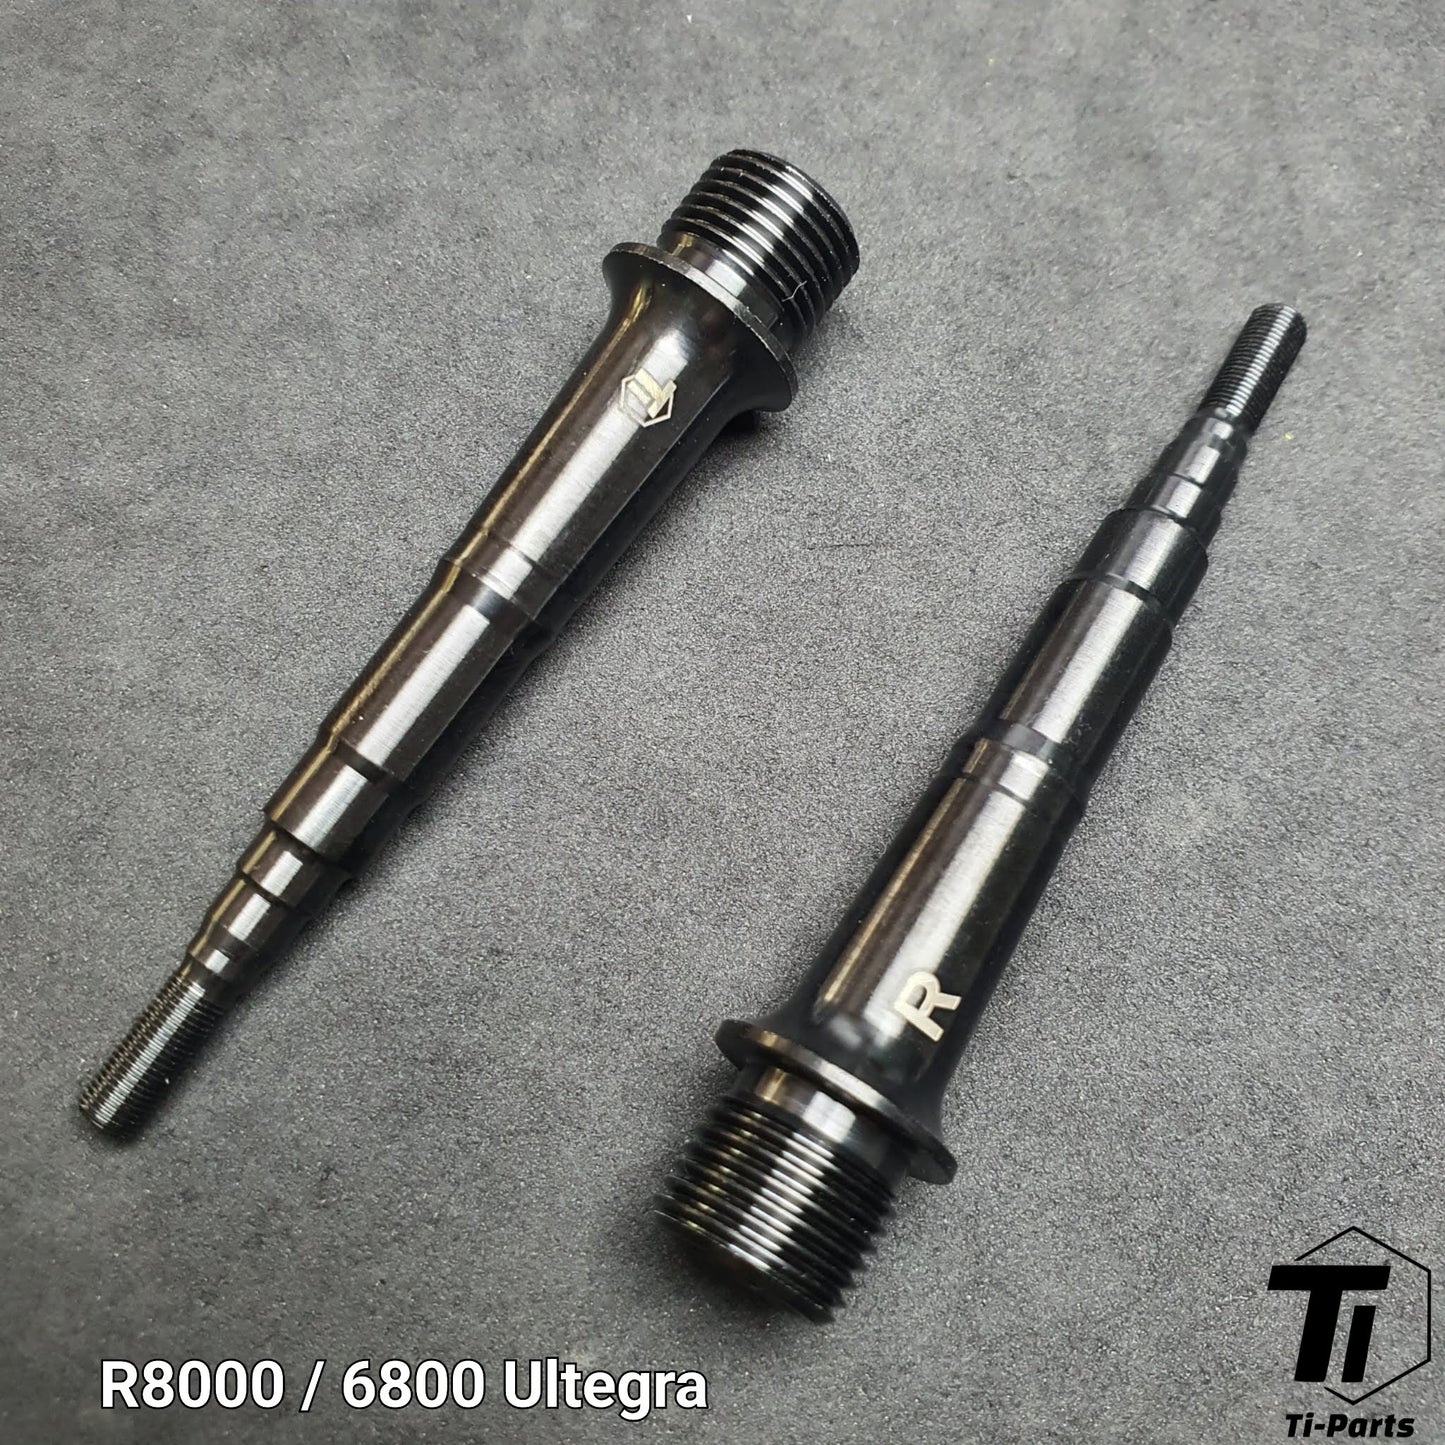 Titanium-Pedalachse für Shimano | M9120 M9020 M9000 M8000 XT XTR Ultegra Dura Ace 9000 6800 R8000 R9100 M975 M980 M990